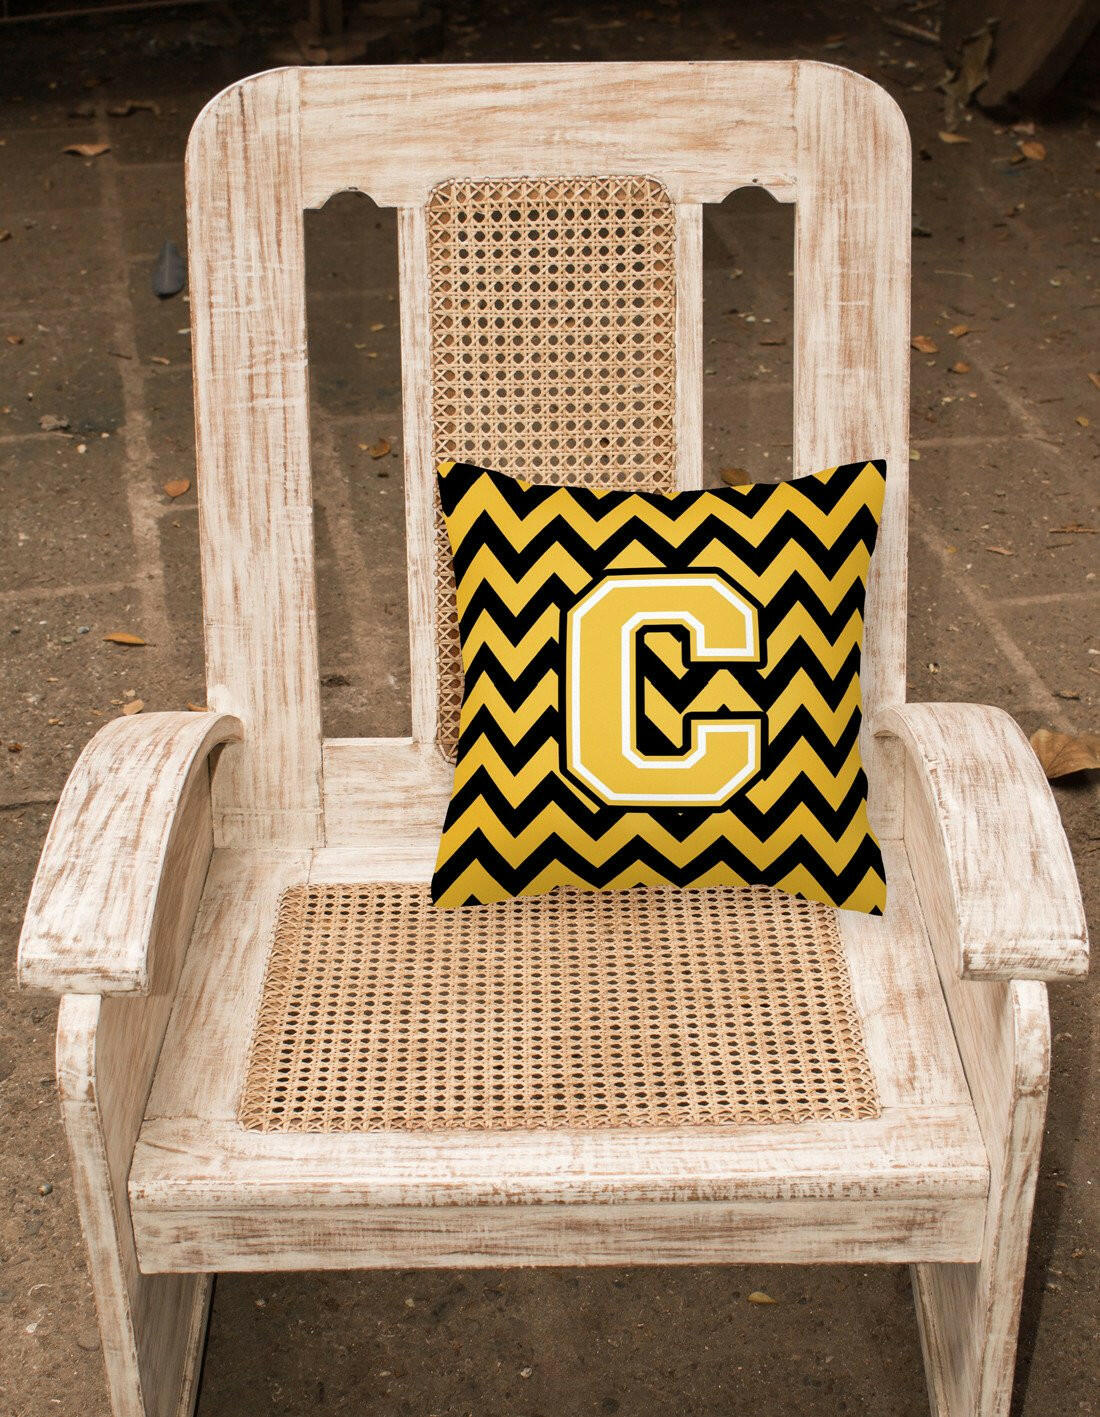 Letter C Chevron Black and Gold Fabric Decorative Pillow CJ1053-CPW1414 by Caroline's Treasures